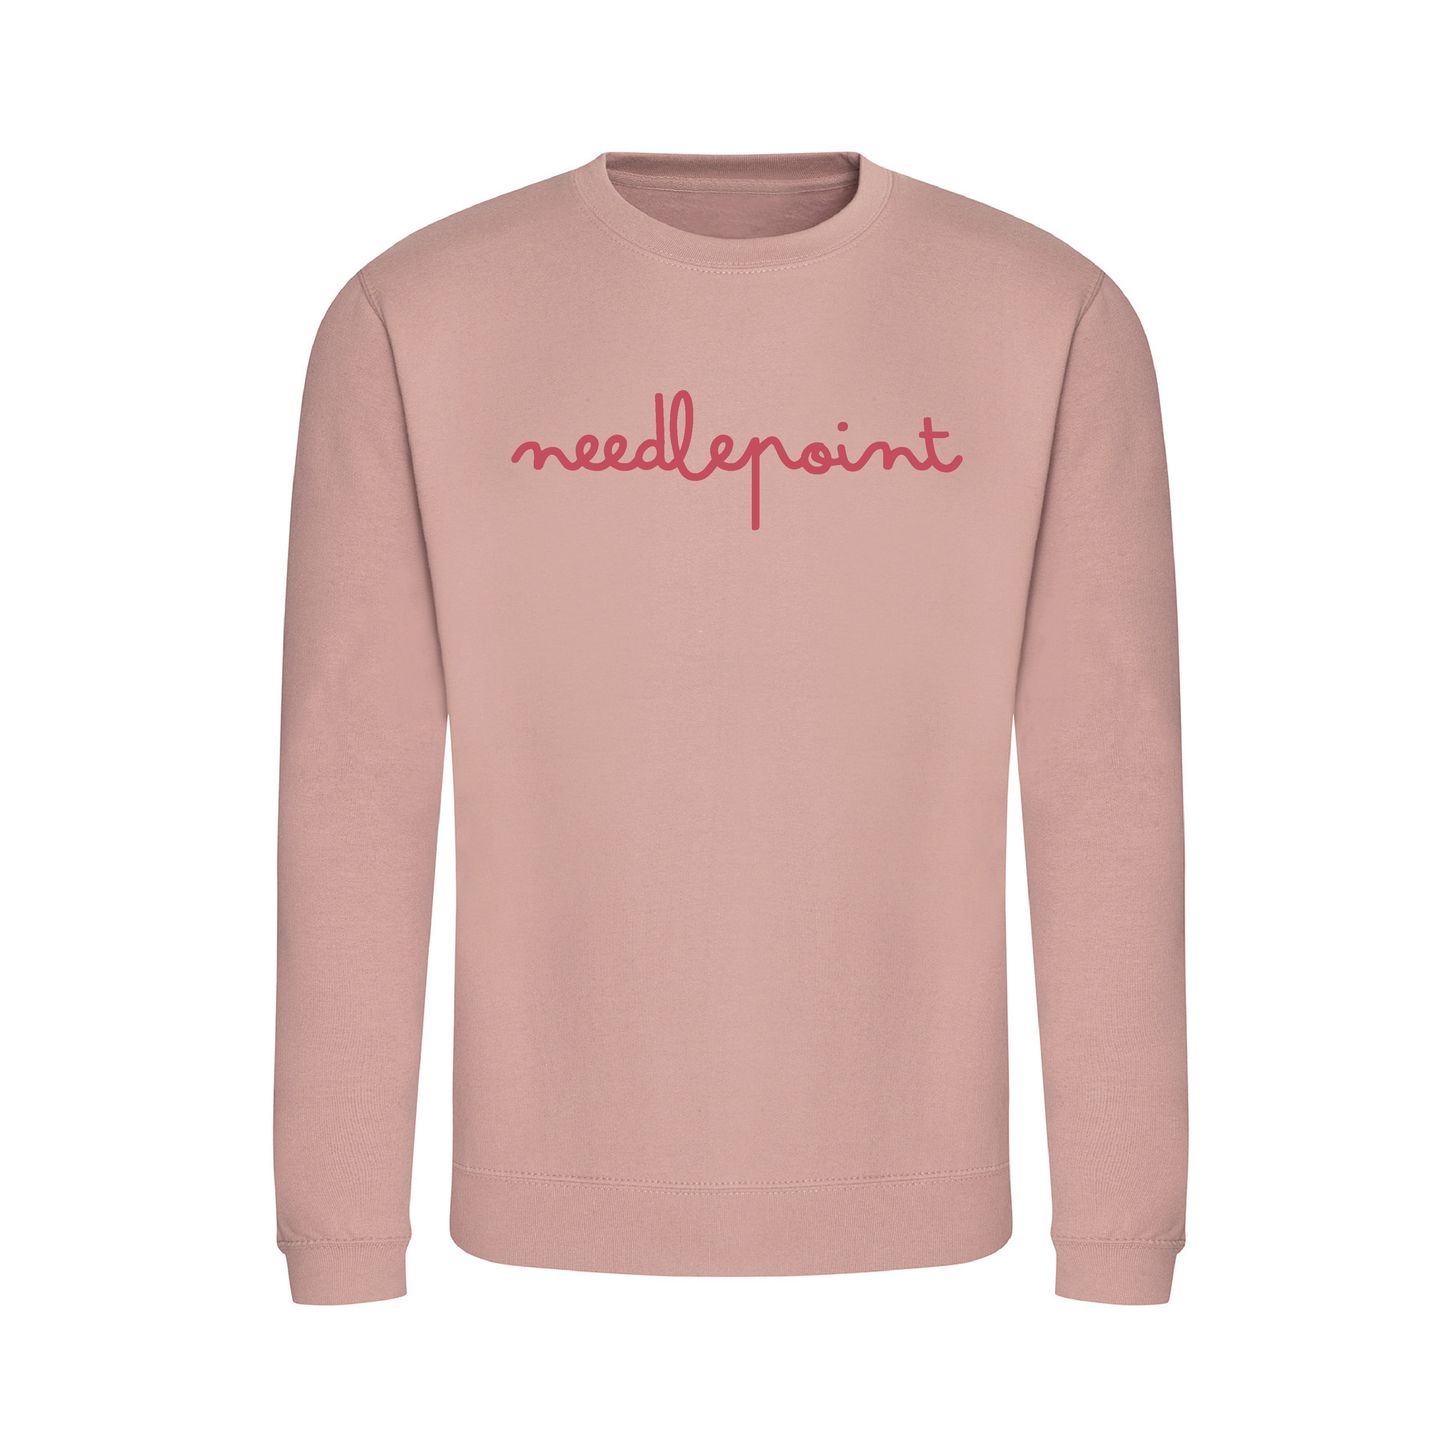 needlepoint sweatshirt - crawfish